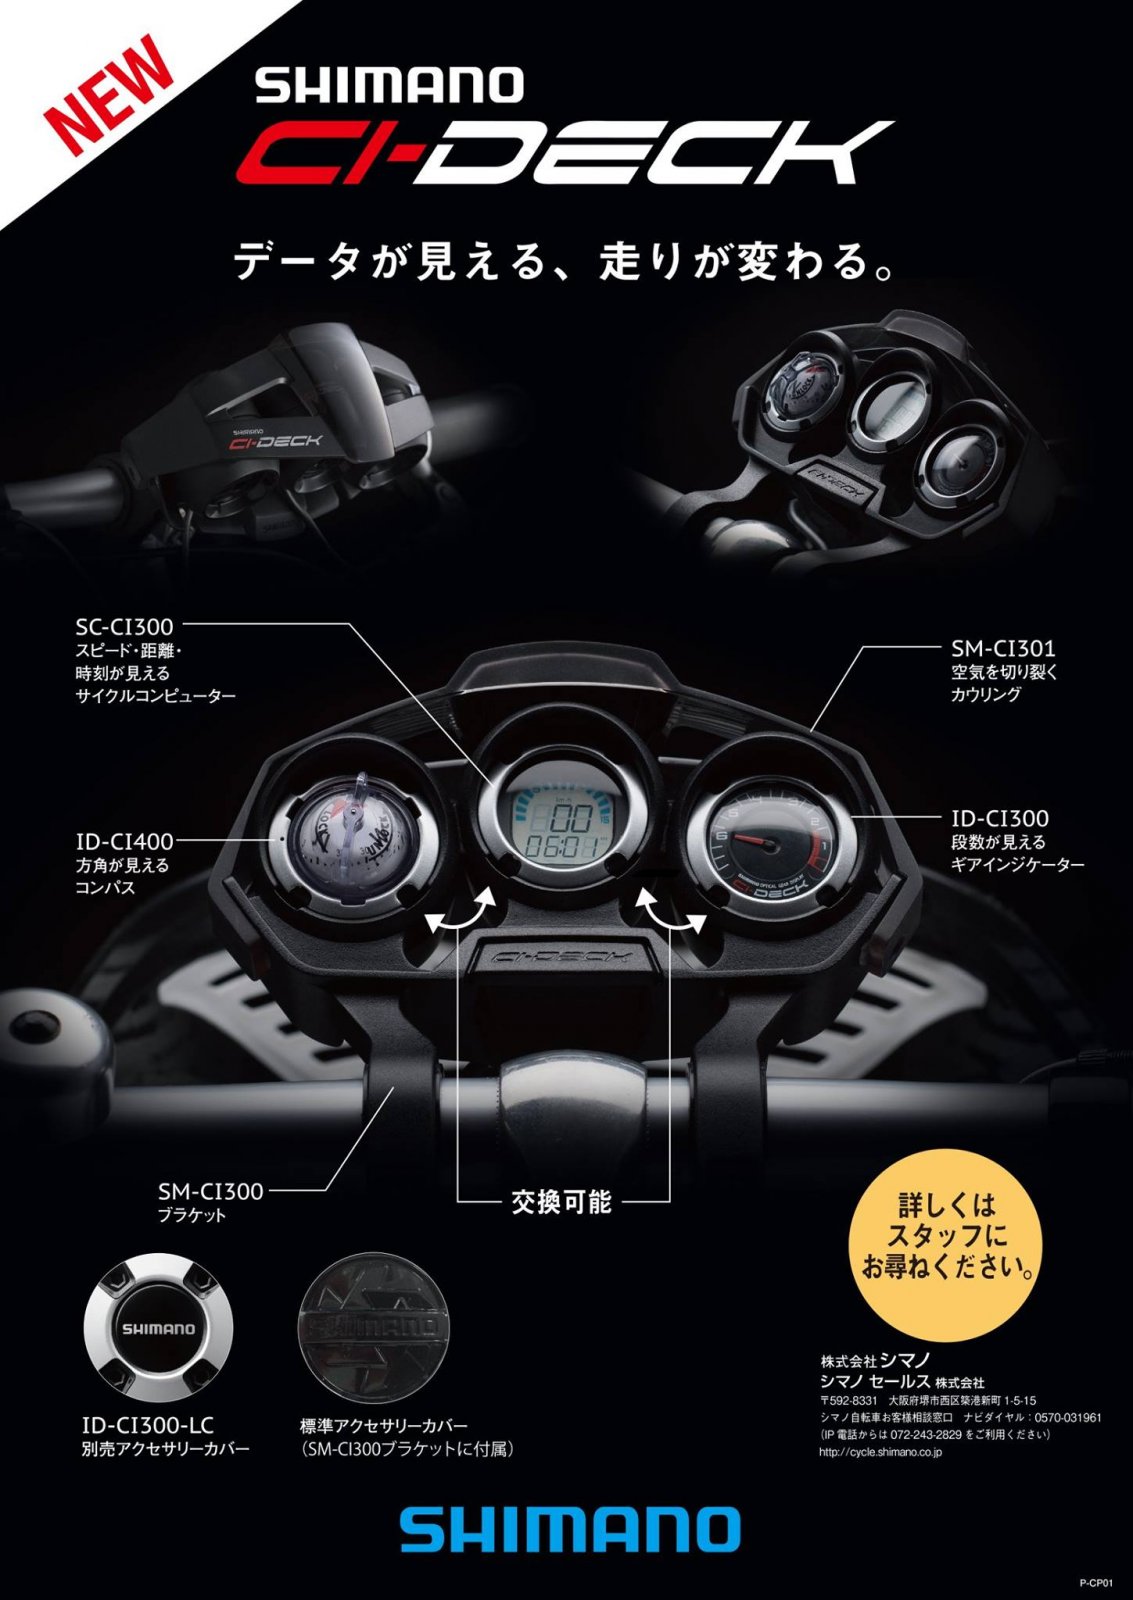 Shimano CI-Deck Ad.jpg